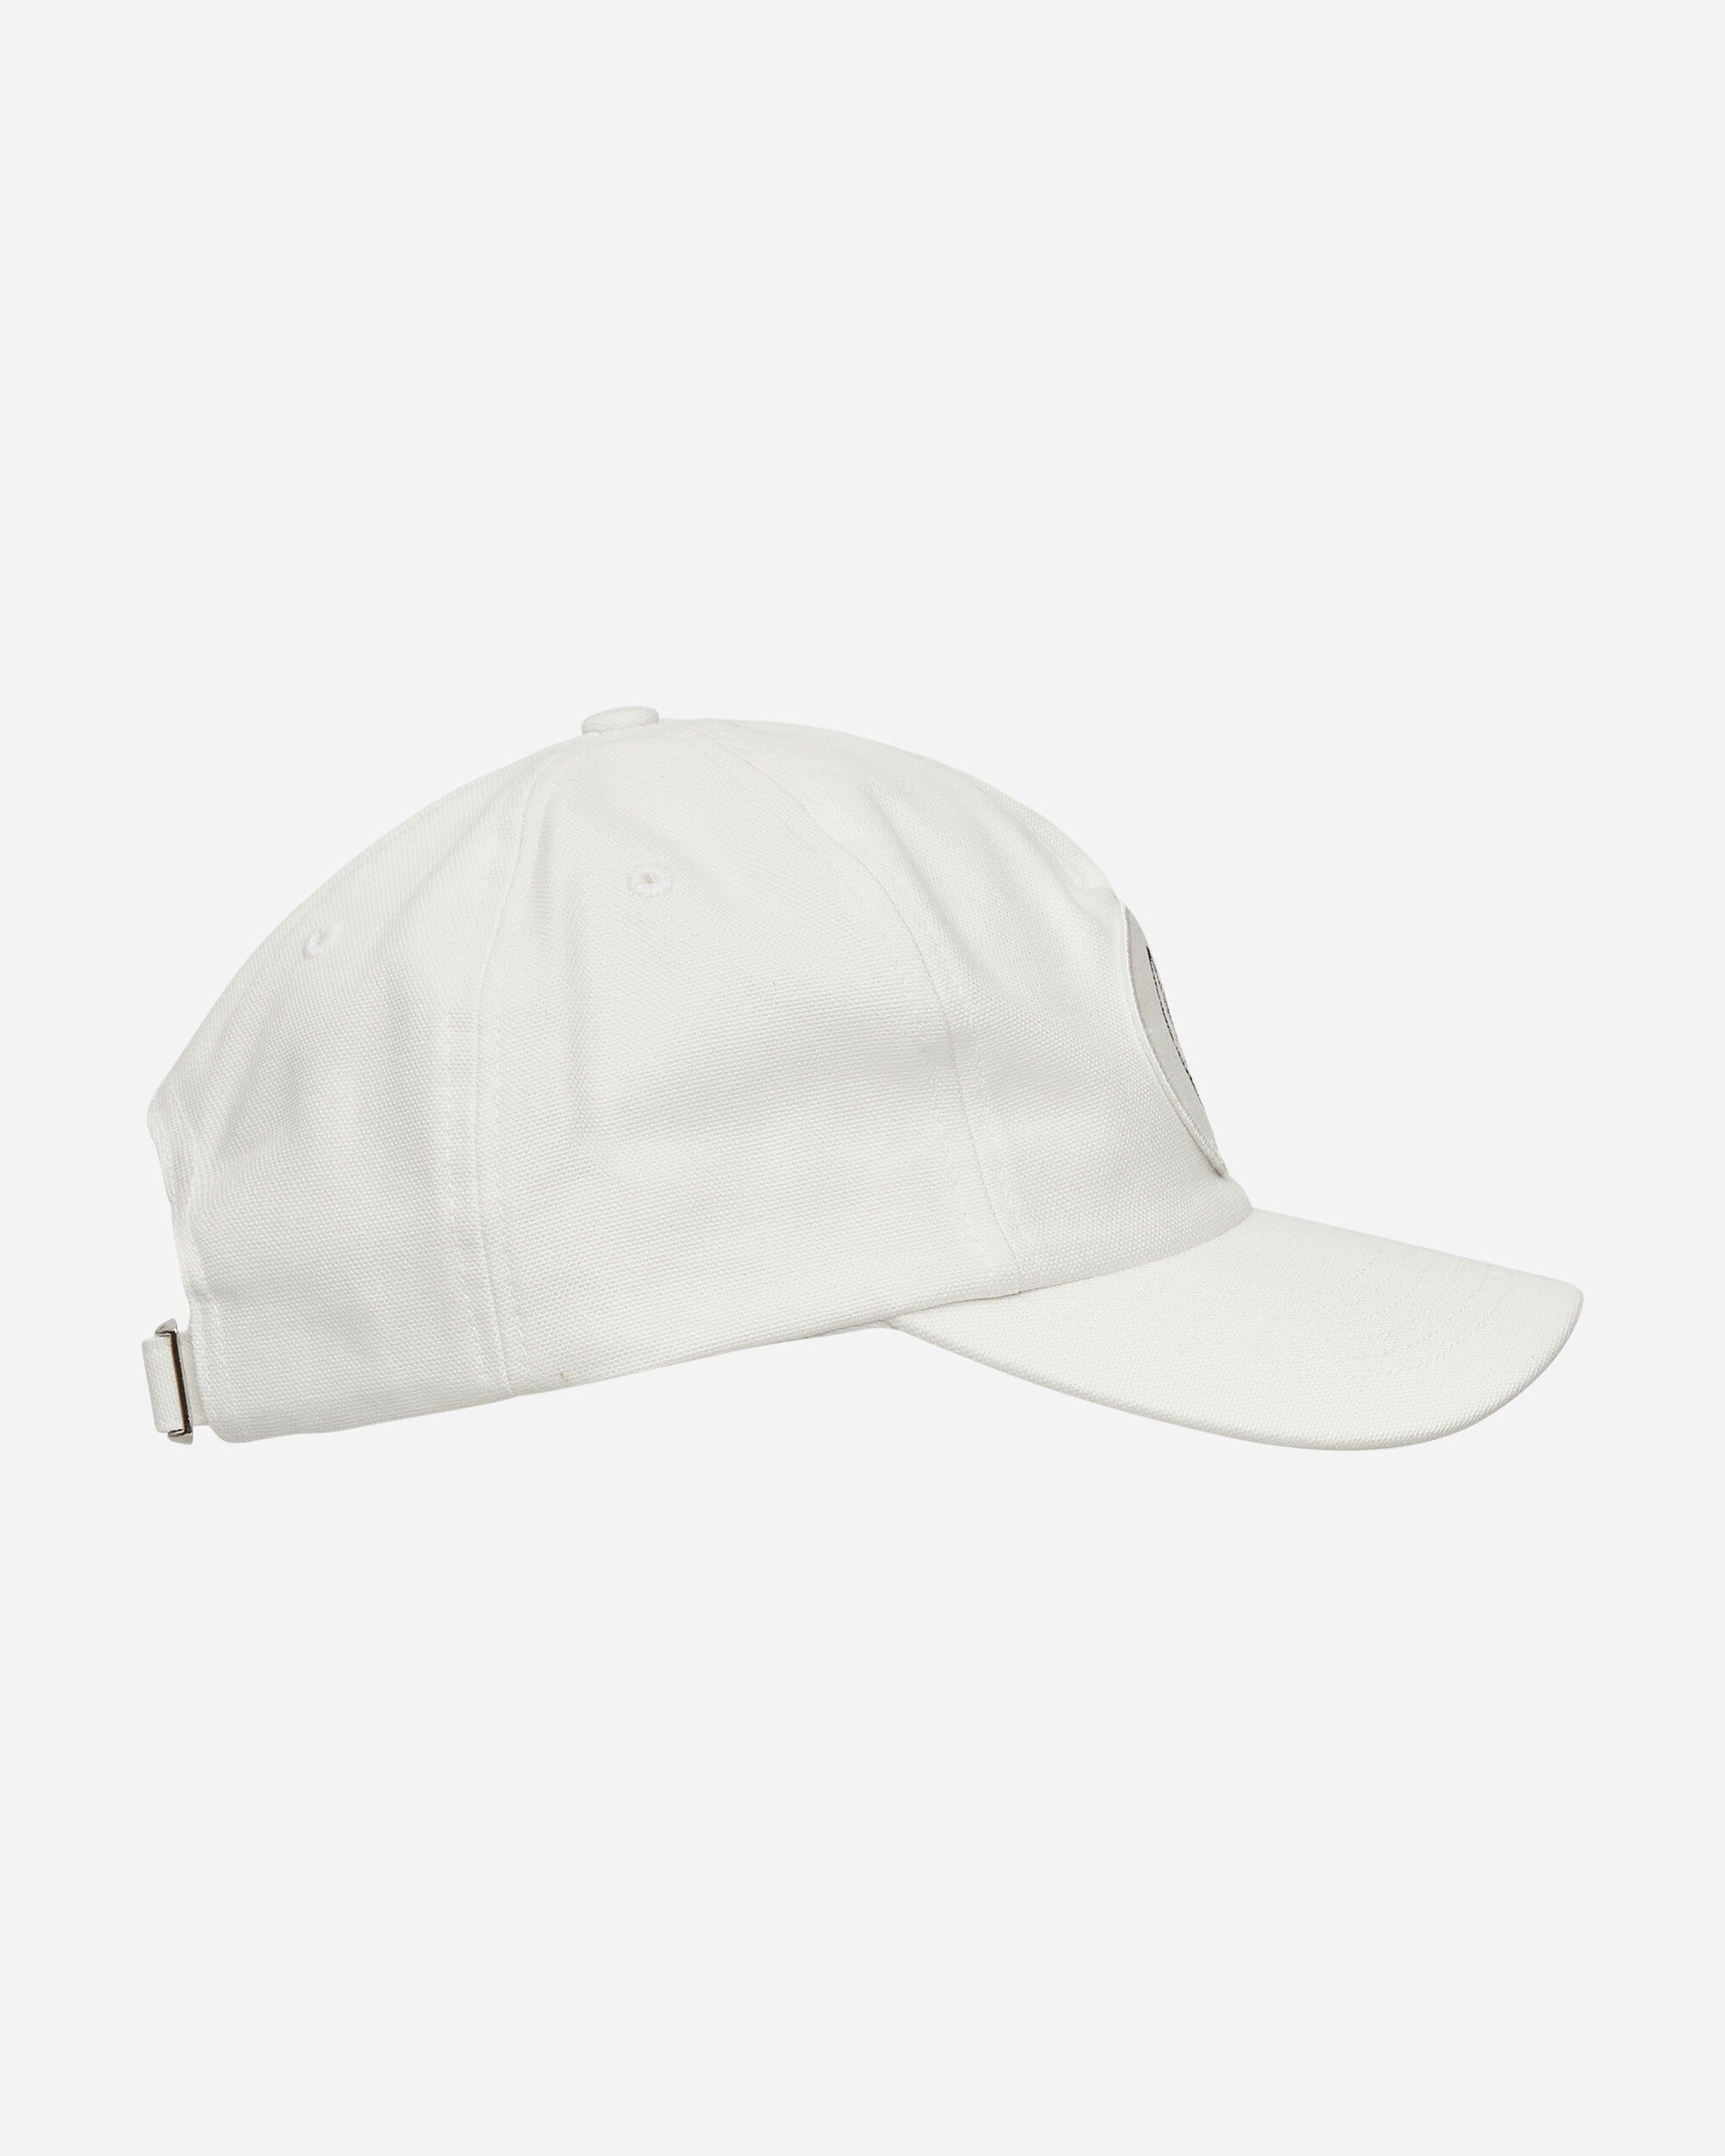 Sky High Farm Alastair Mckimm Workwear Cap Woven White Hats Caps SHF04K414  1